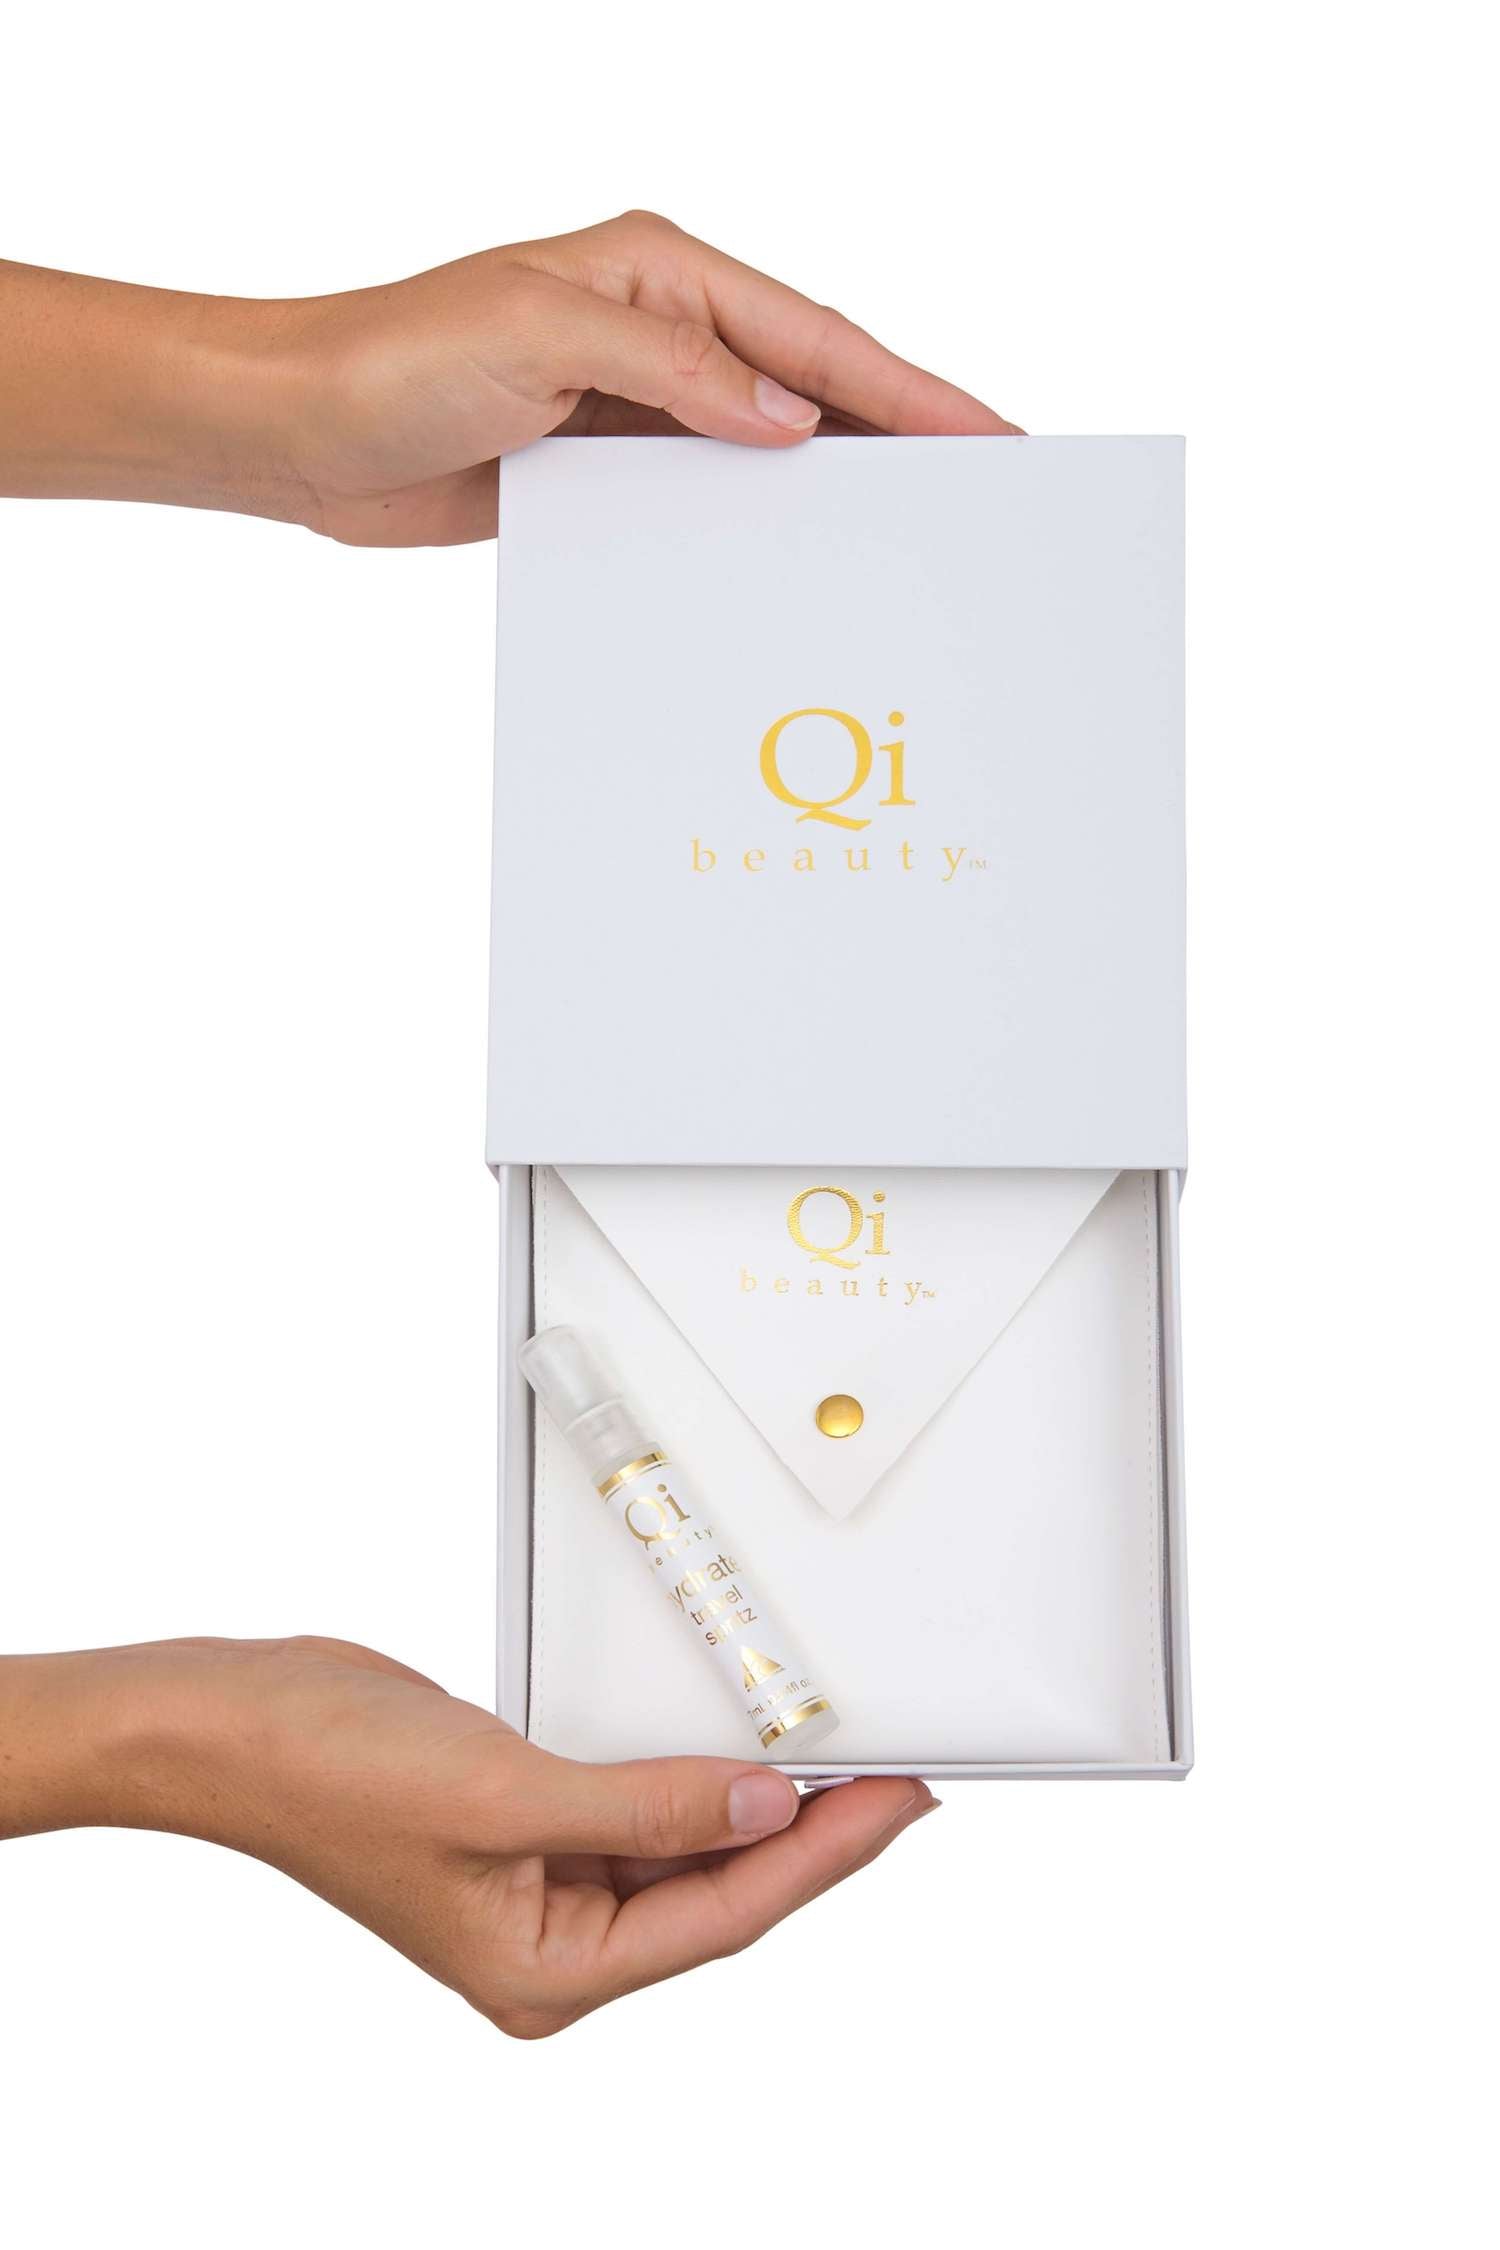 Qi beauty Home Kit- Original Patch Kit